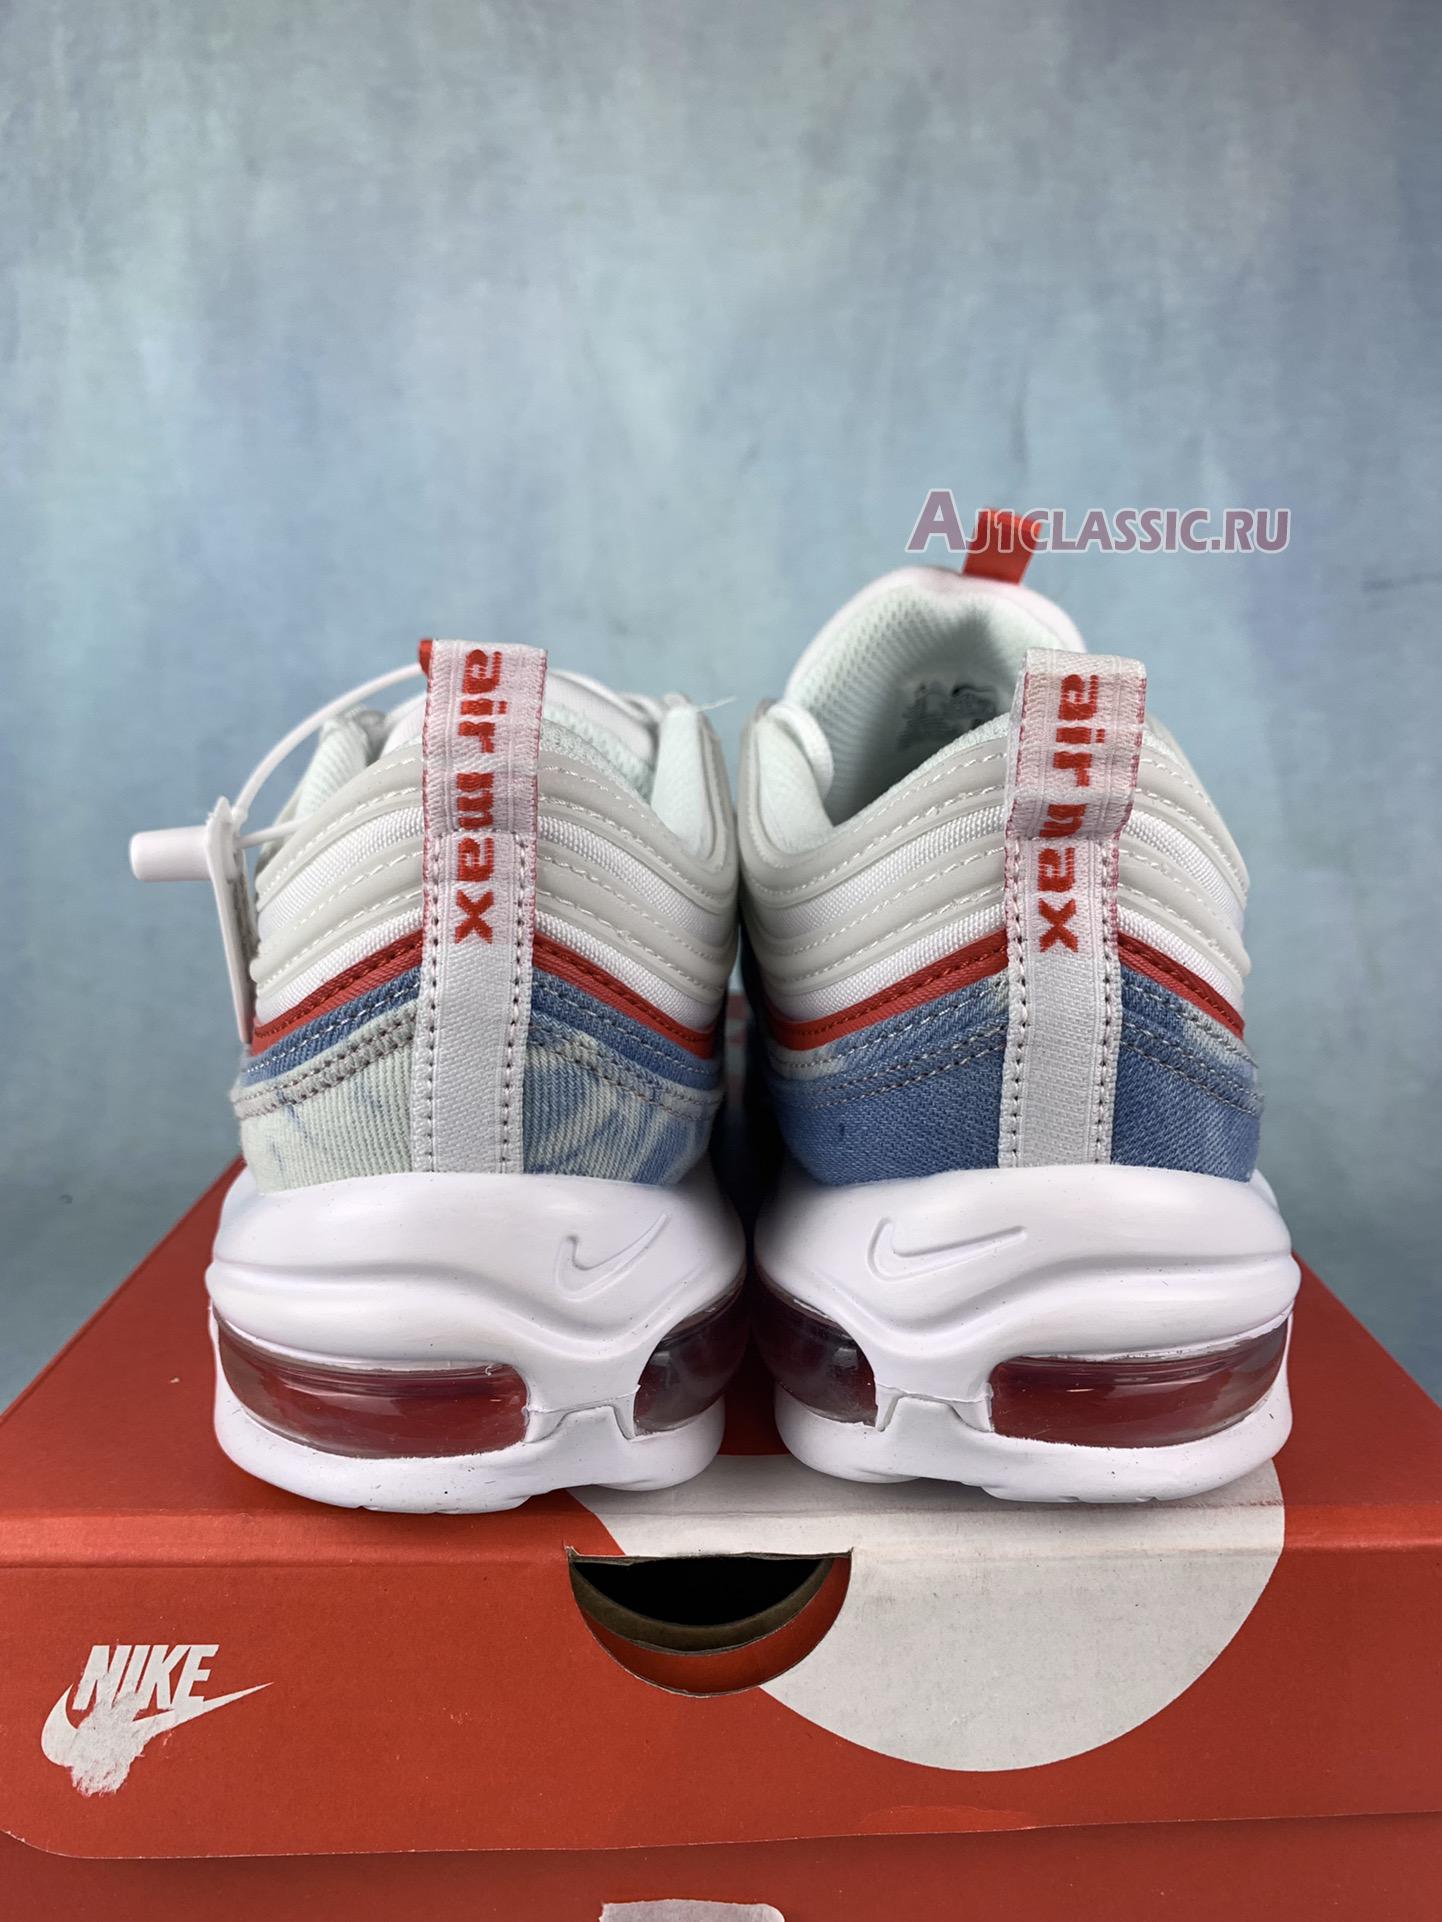 Nike Air Max 97 "Washed Denim" DV2180-900